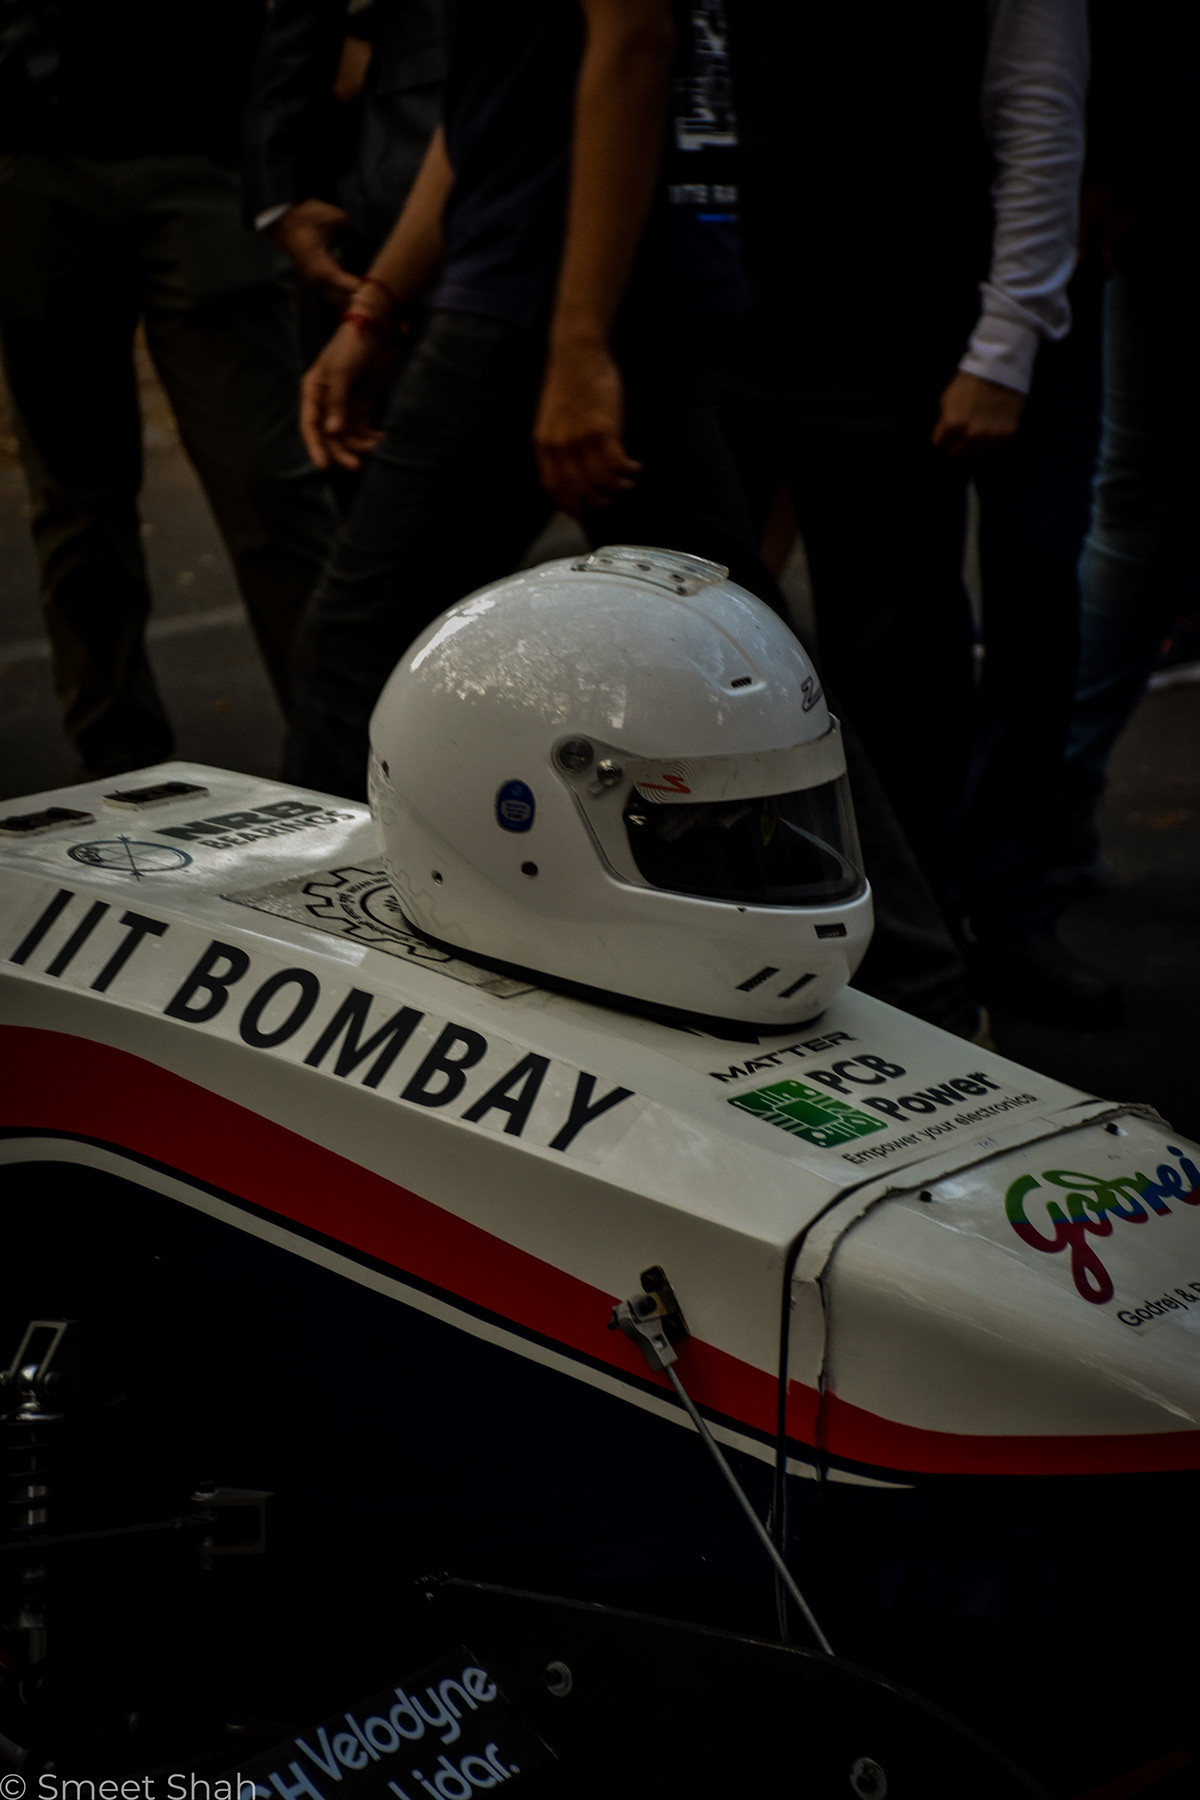 Racing Vehicle automotive   car Formula 1 iit Bombay Roadshow Event